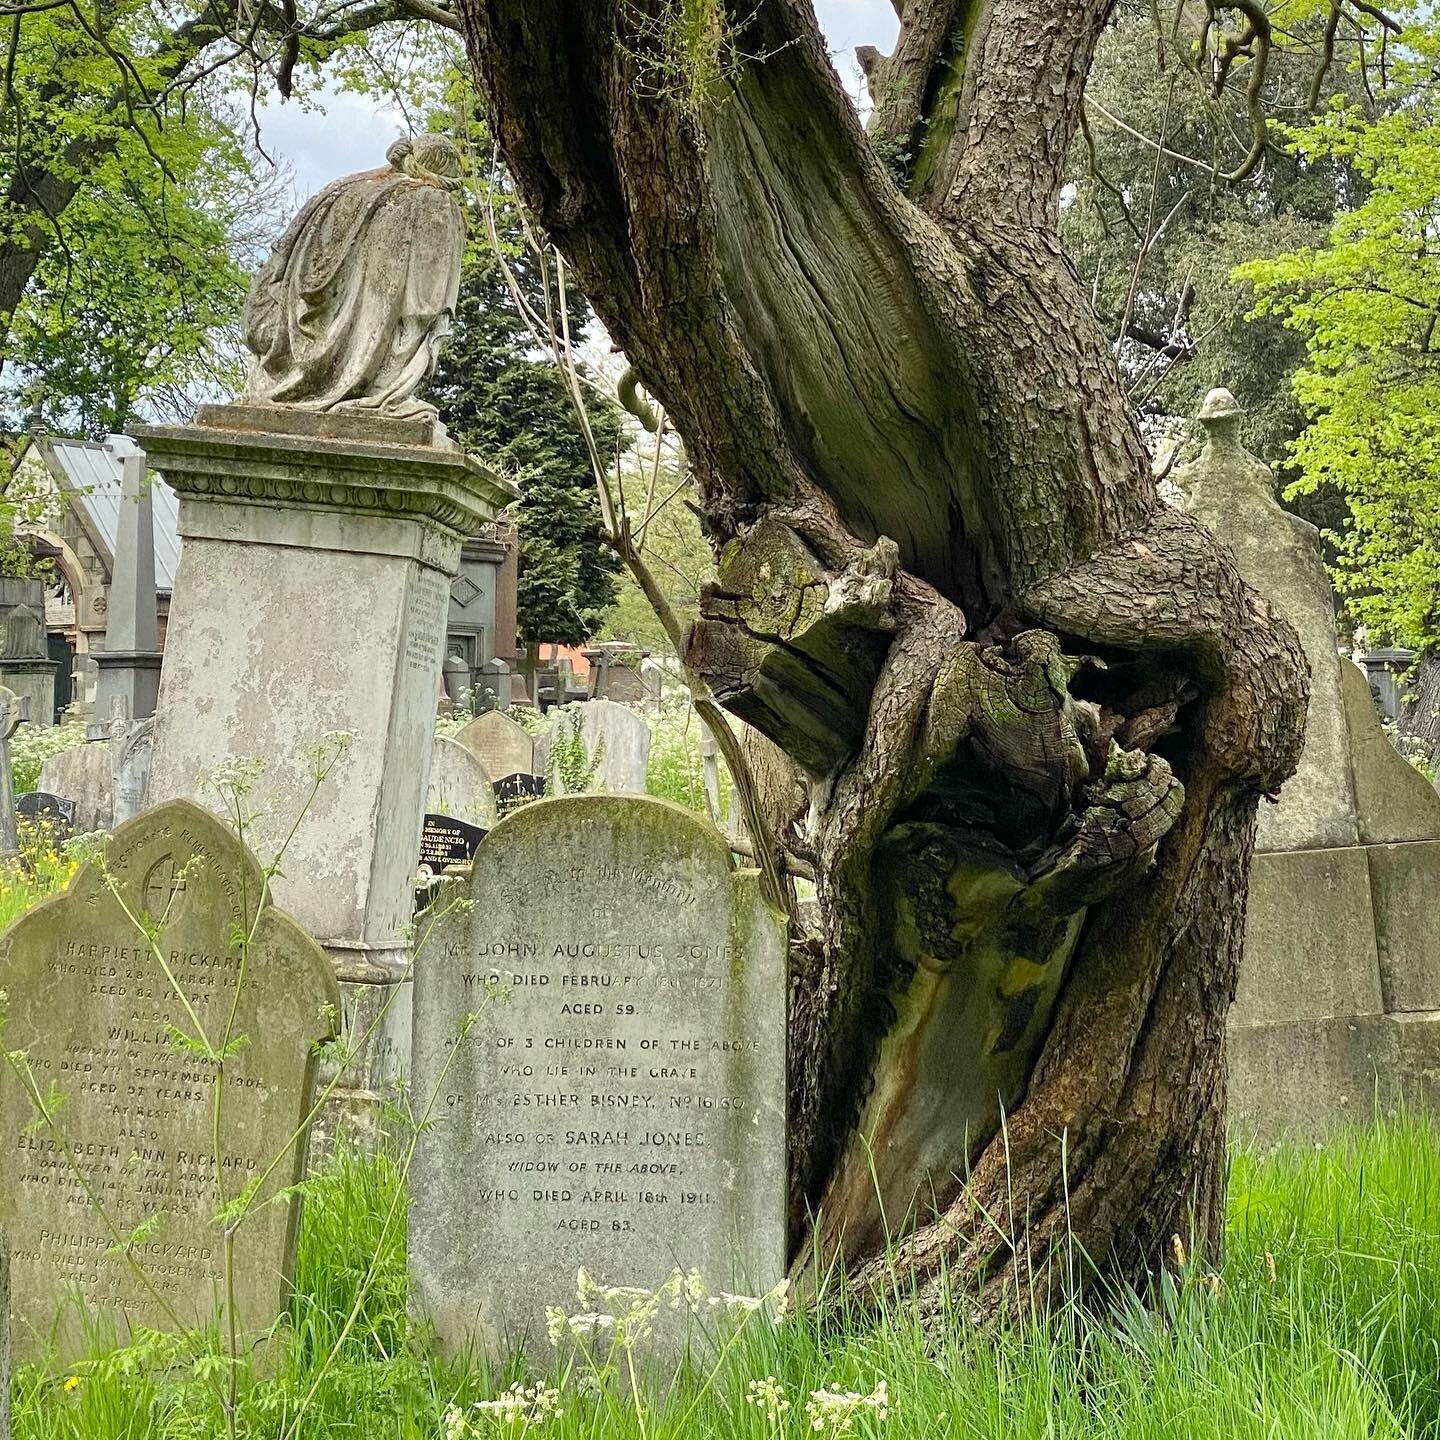 Character tree,
Kendal Green

#kensalgreen #kensalgreencemetery #northwestlondon #cemetery #memorials #gravemarkers #stonecarving #treeface #treecharacter #treeportrait